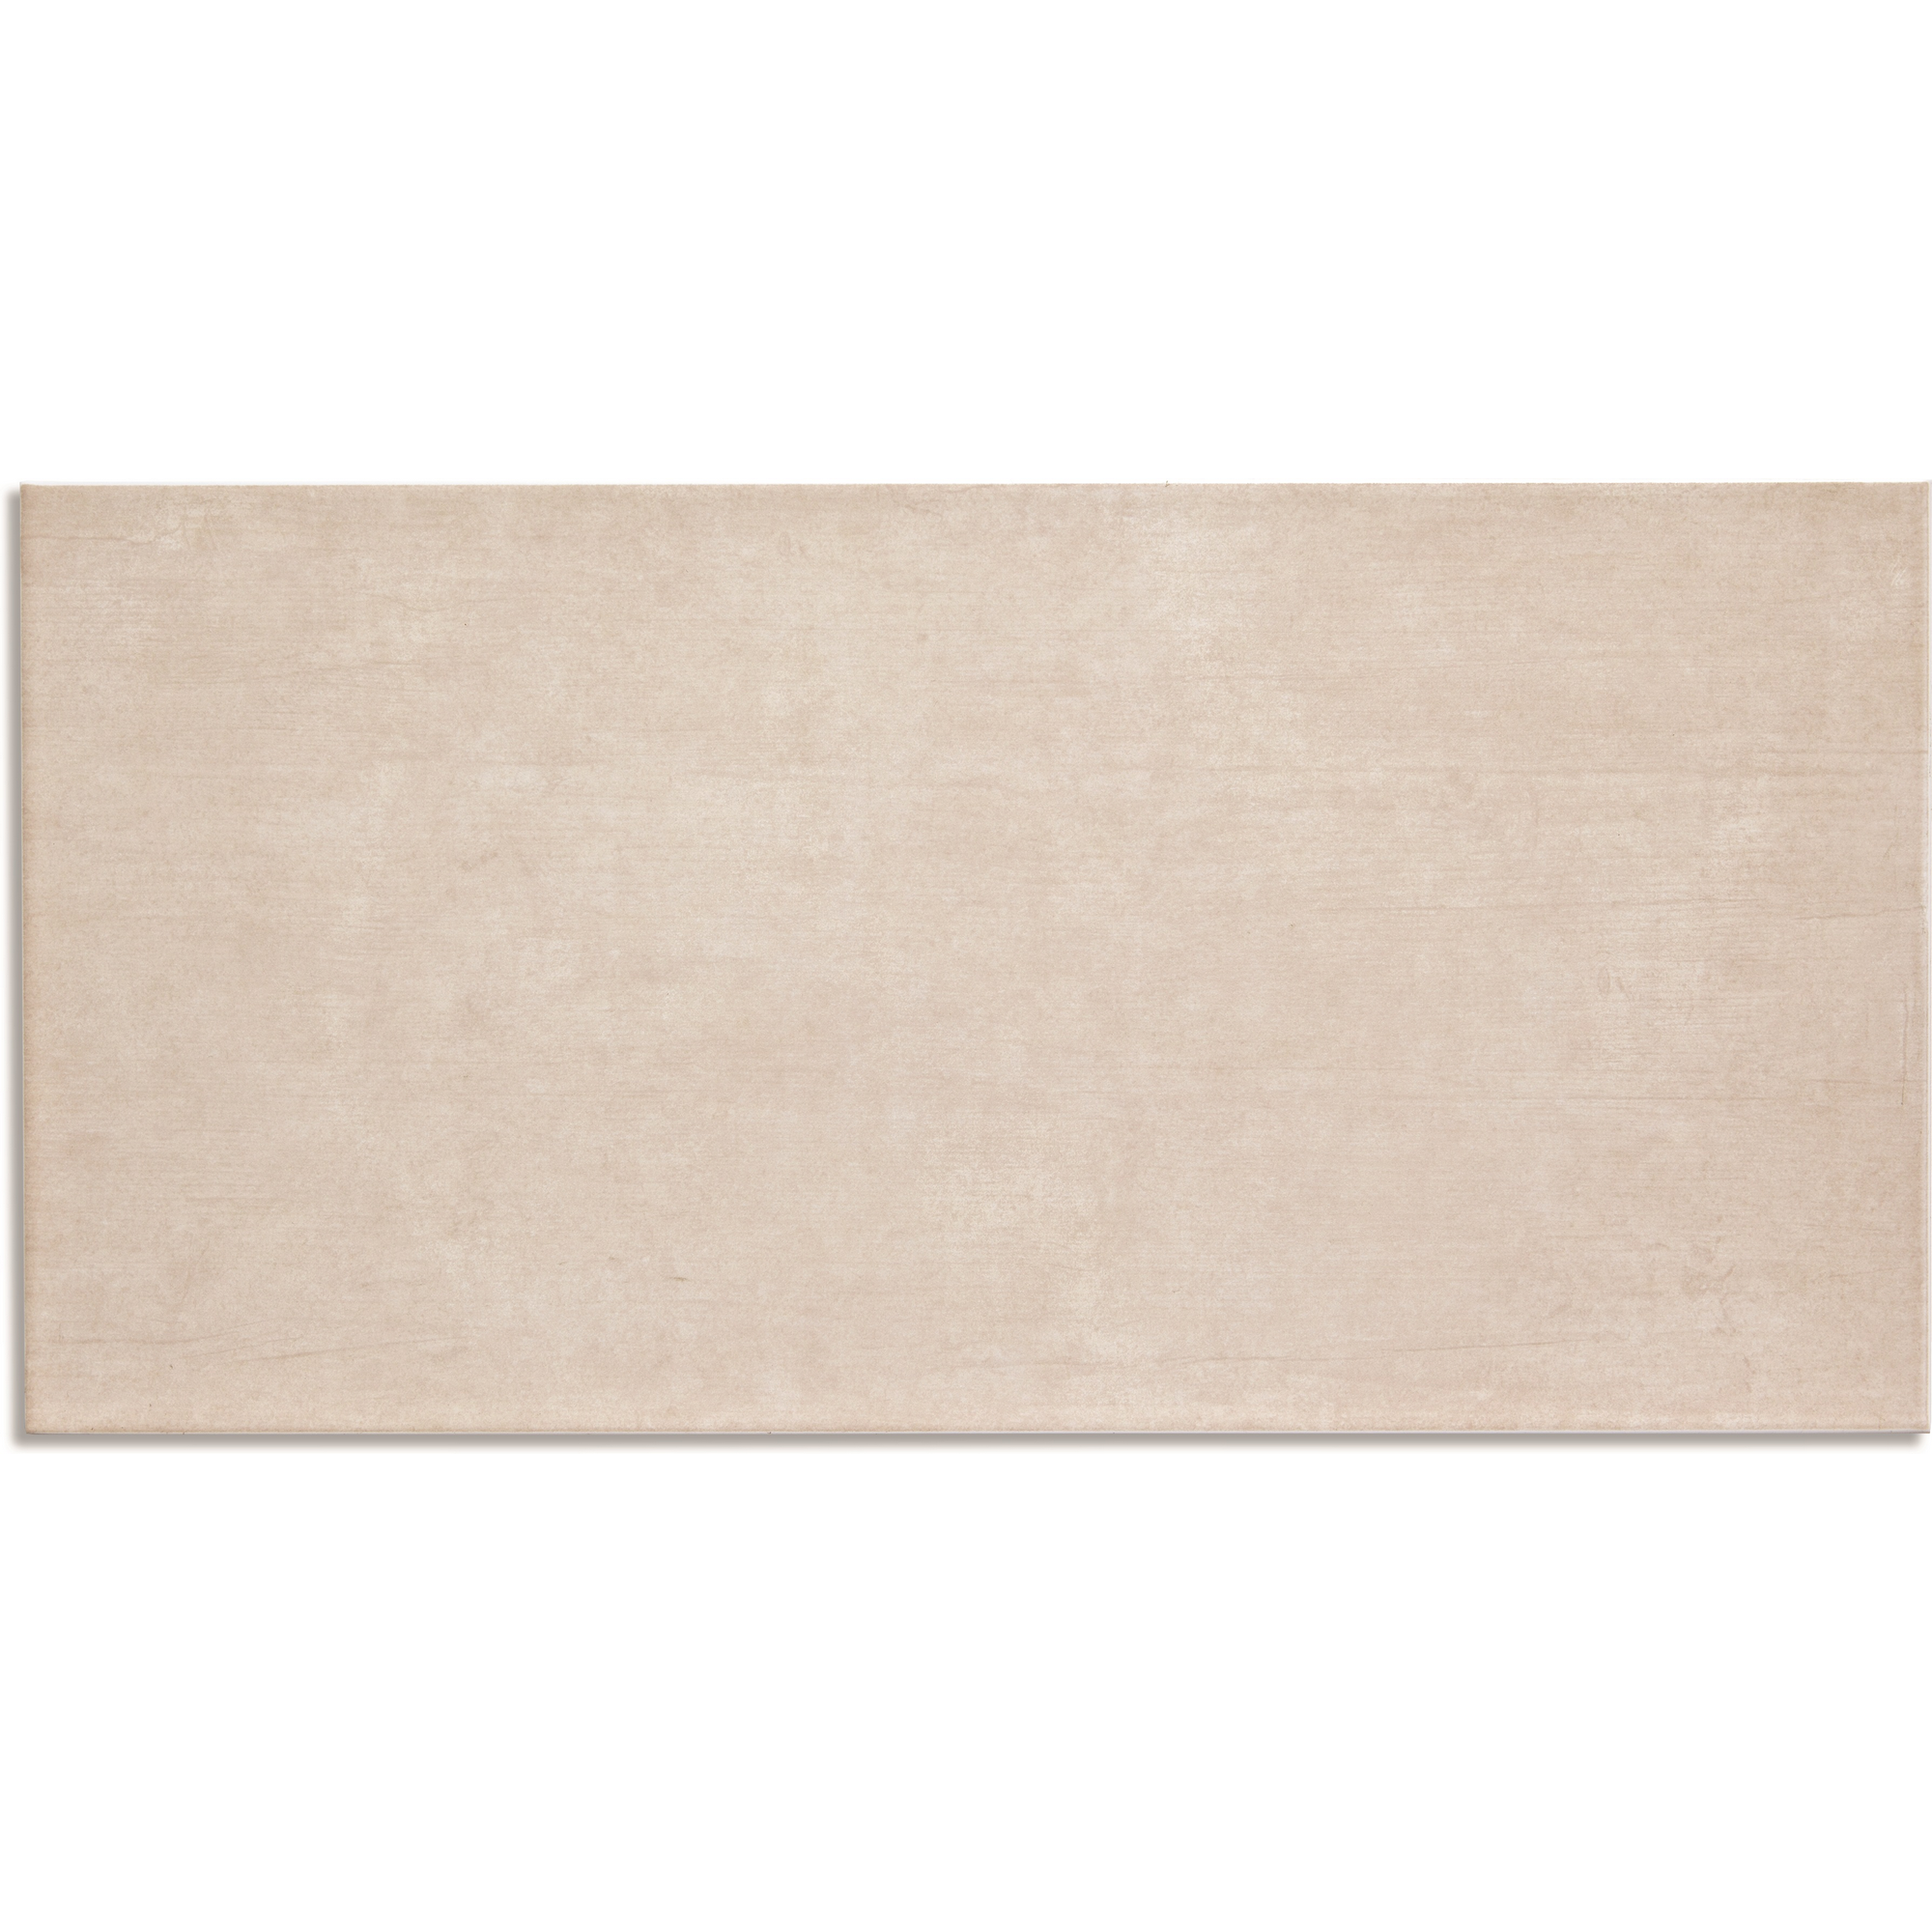 Wandfliese Legno beige 30x60cm + product picture